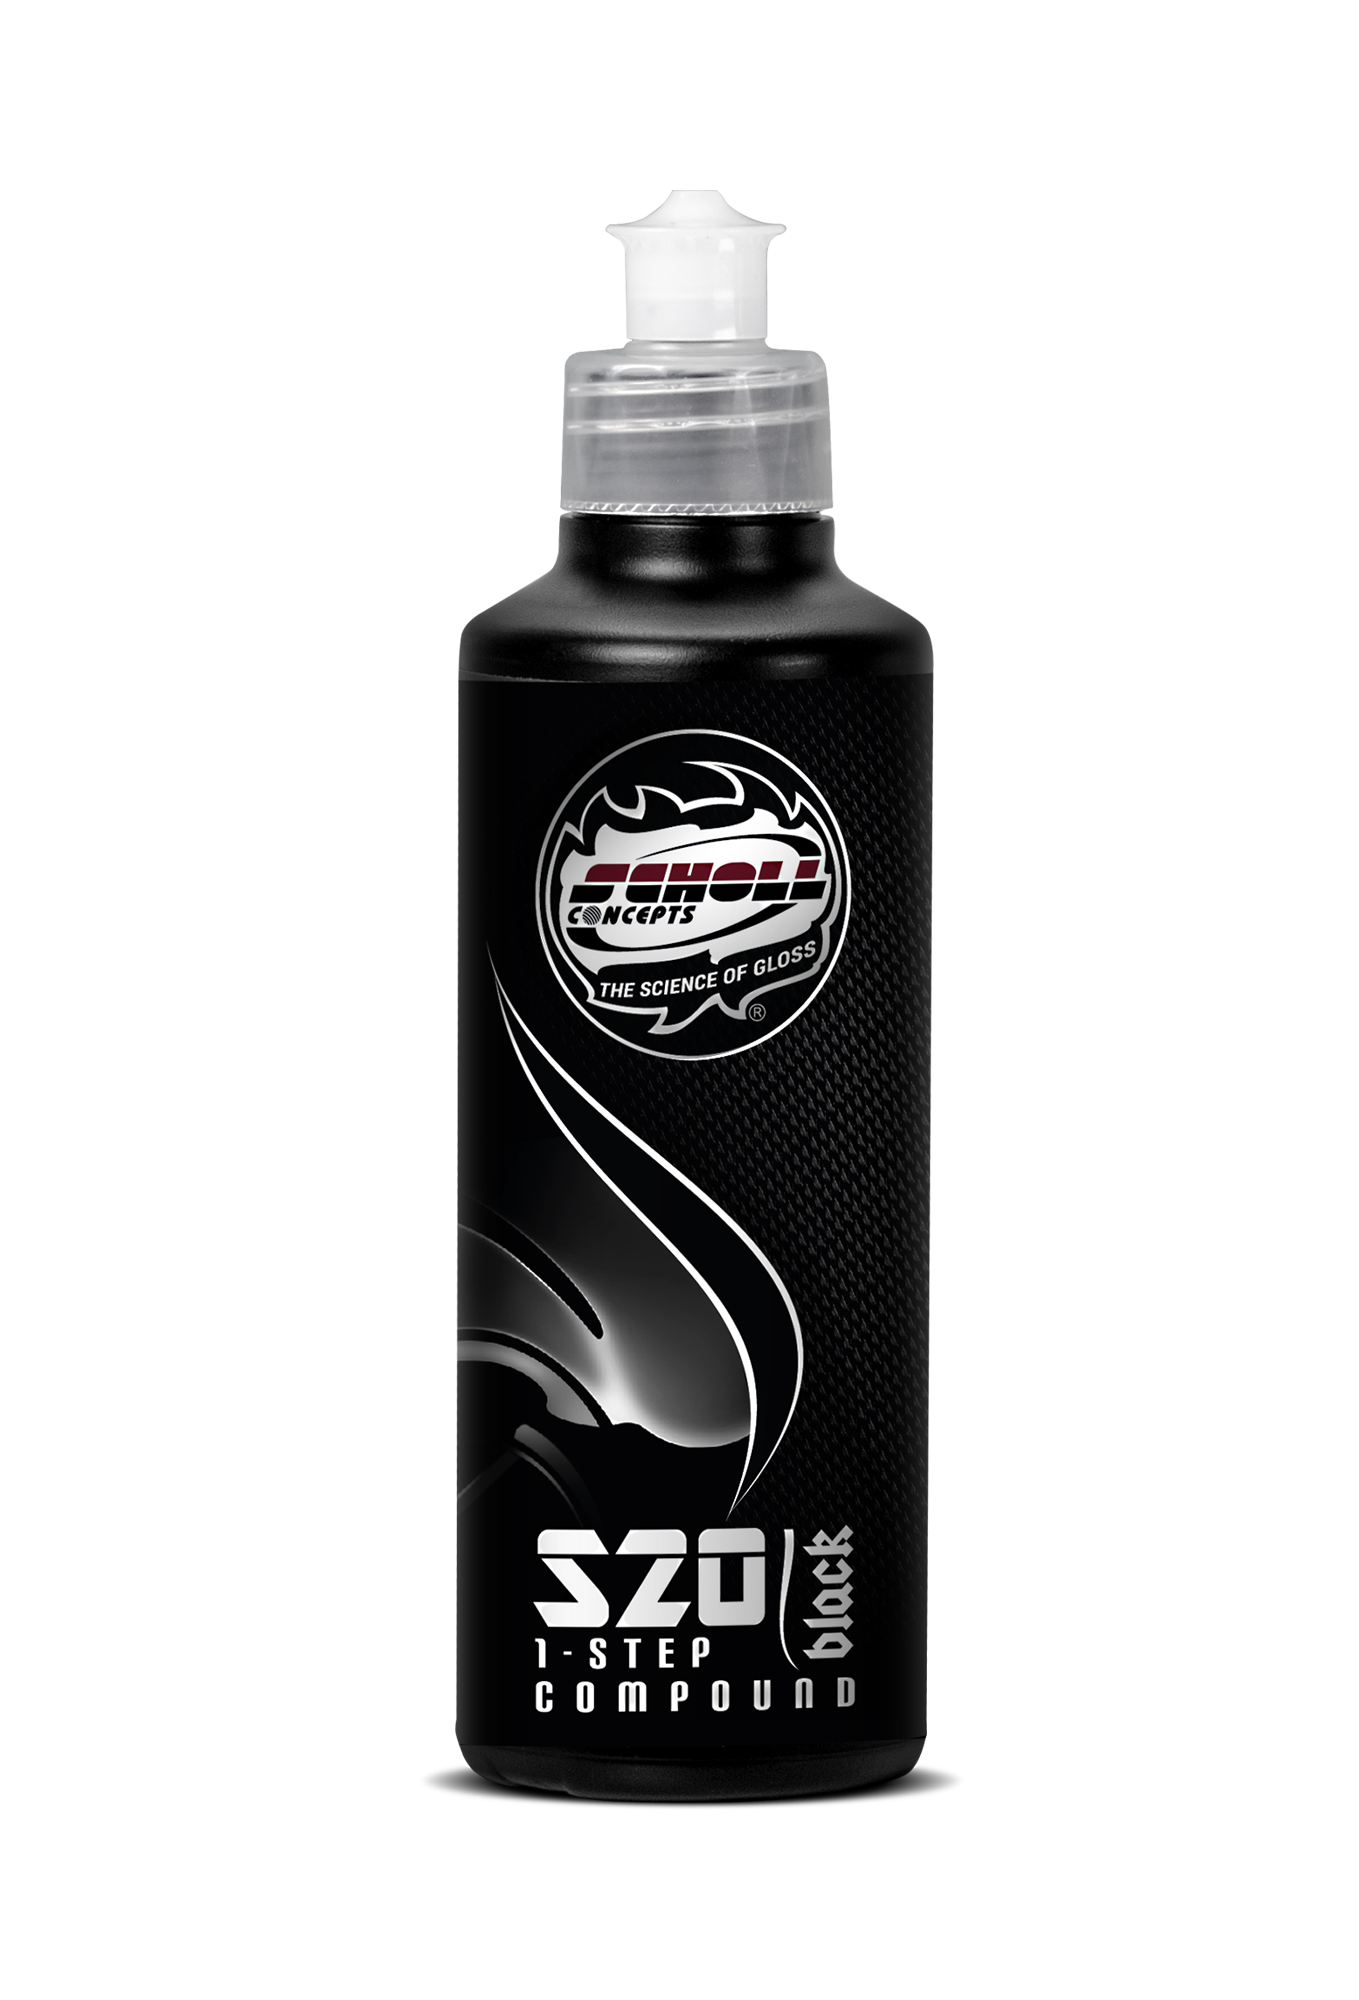 S20 BLACK Real 1-Step Paste 250g